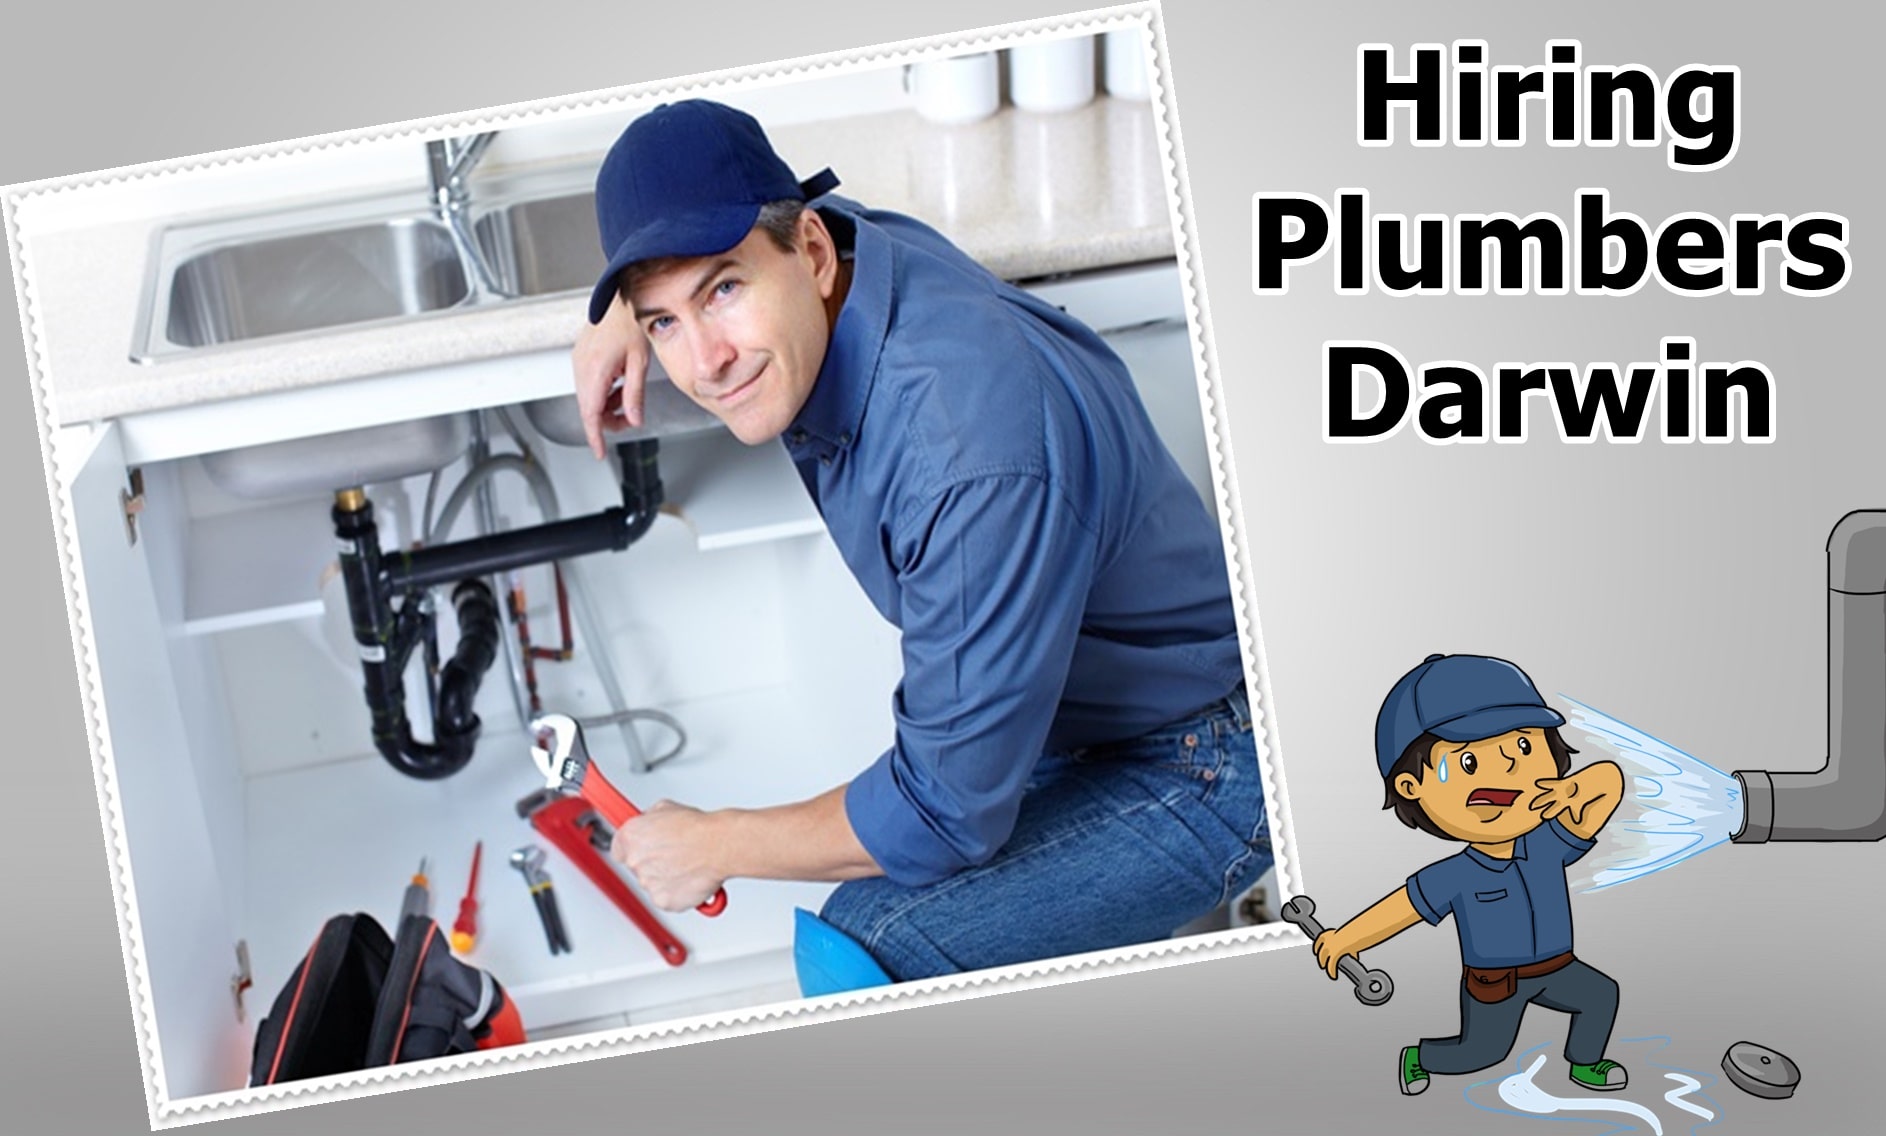 Randy the plumber